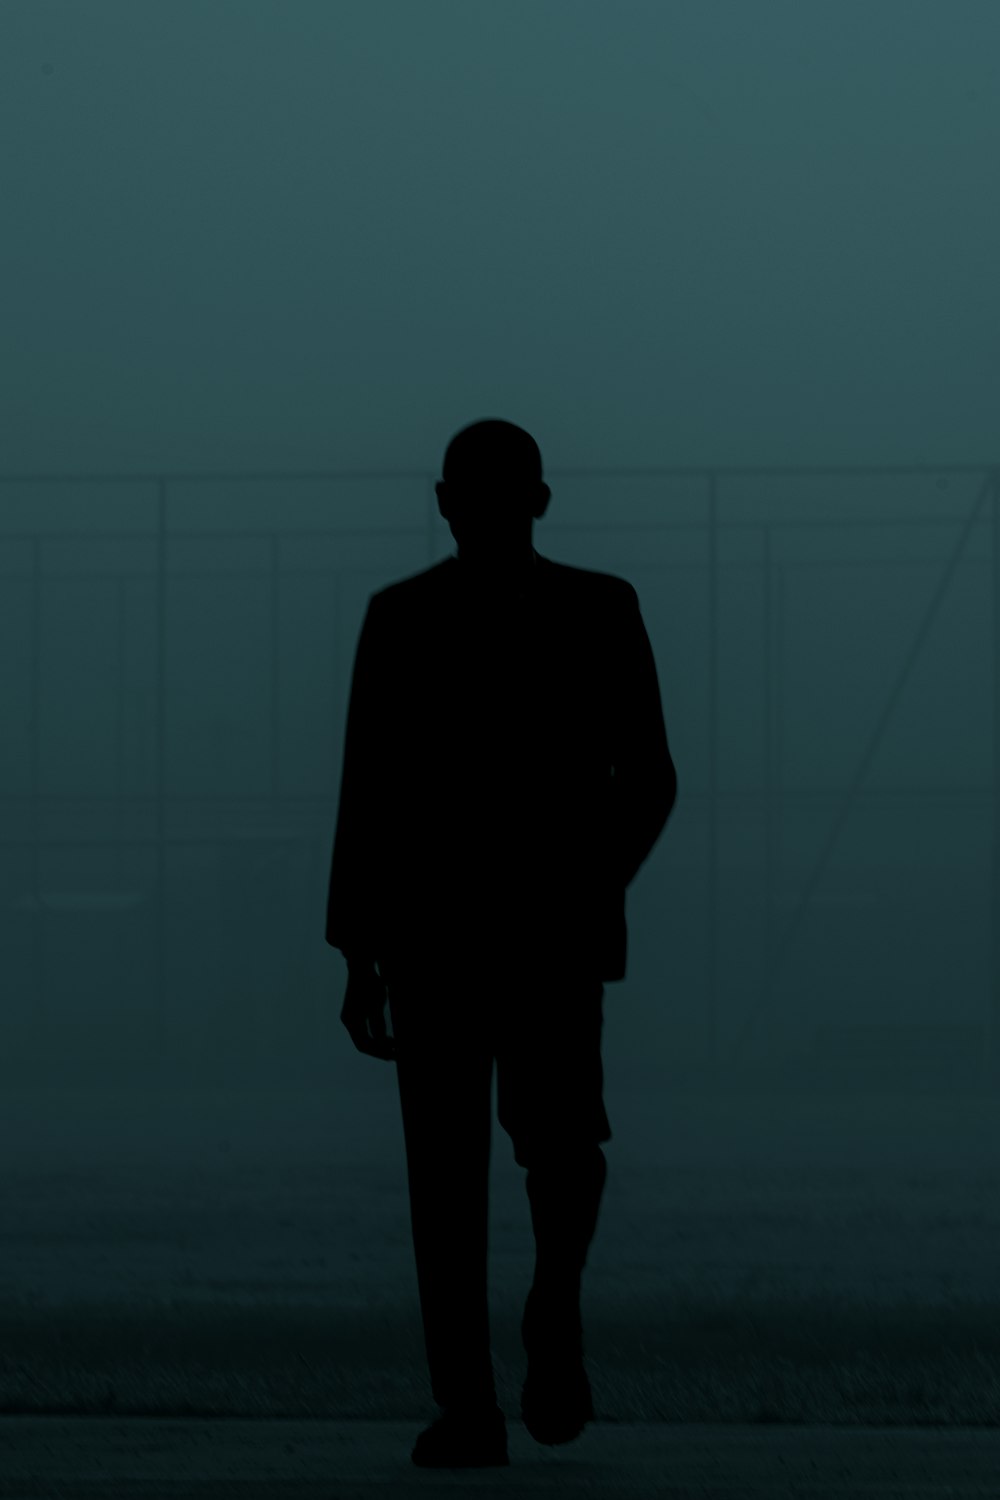 a man in a suit walking in the dark